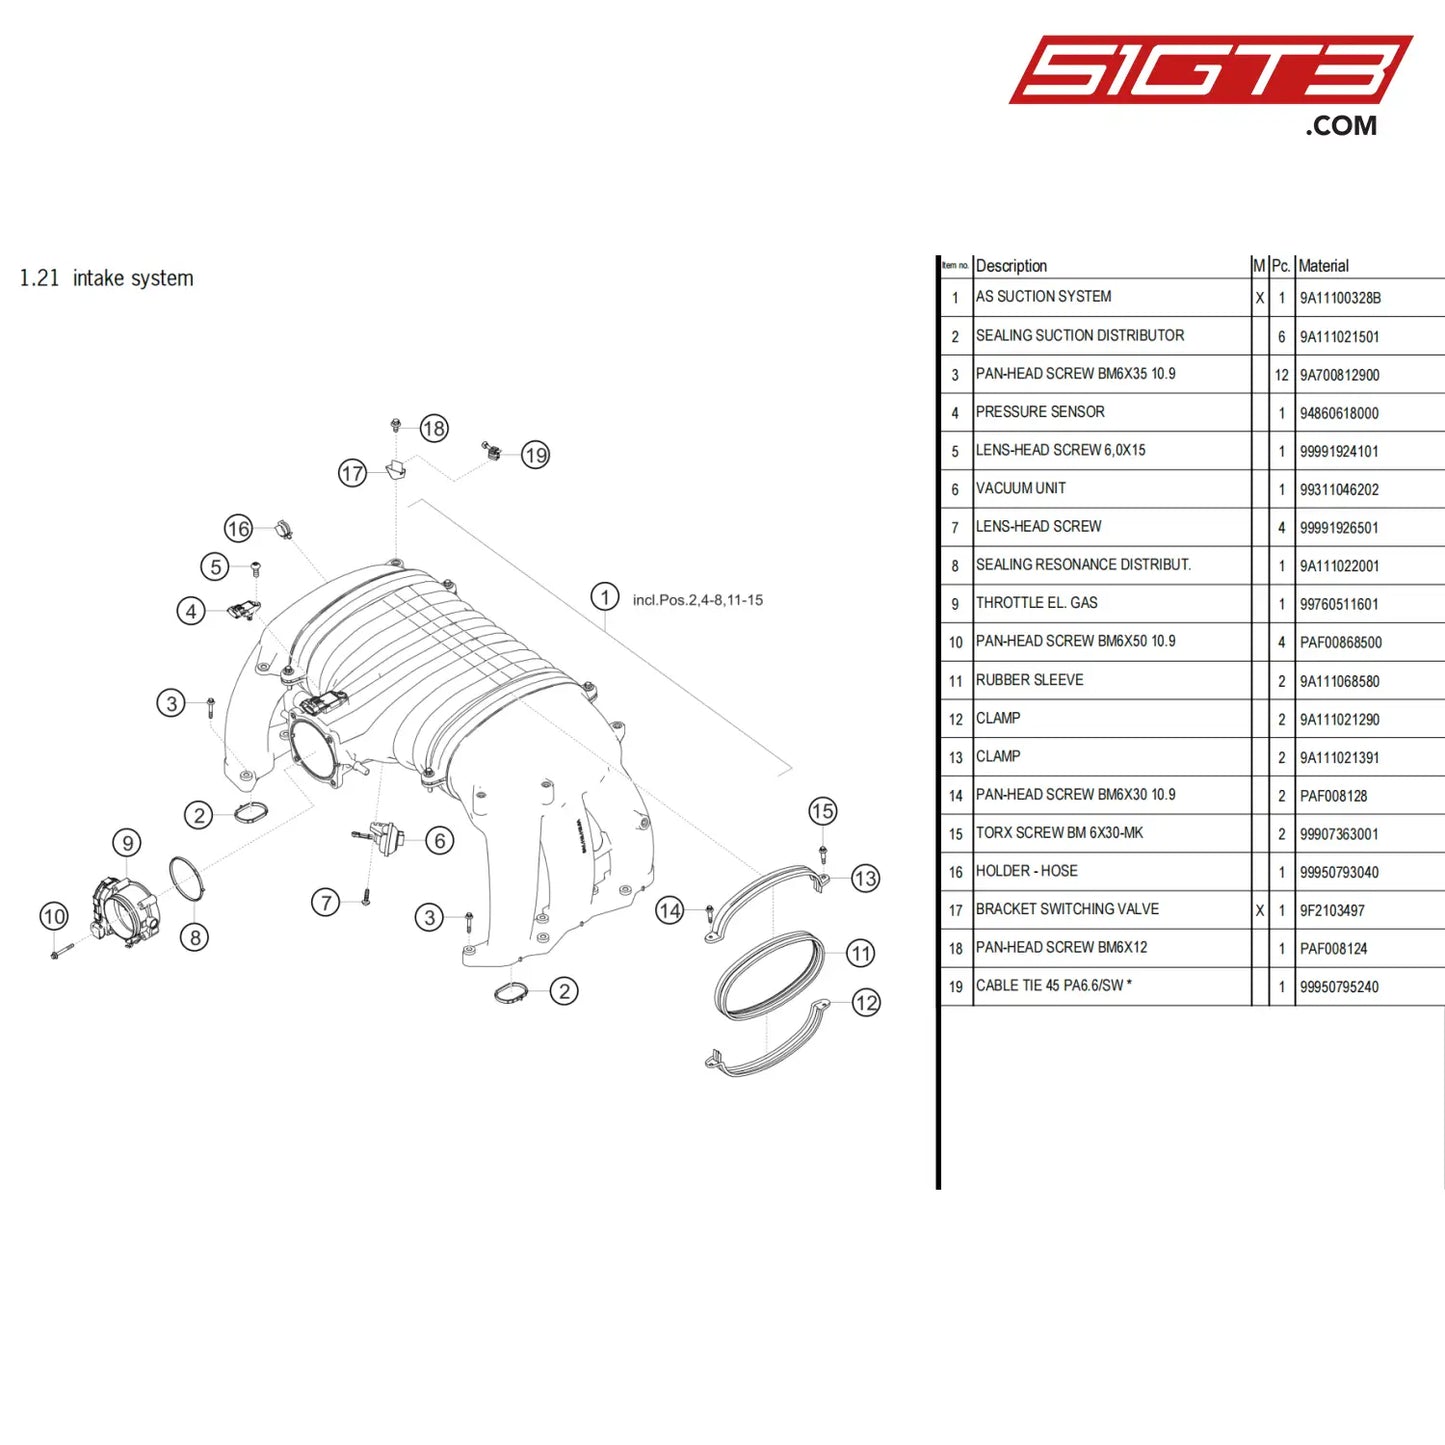 Holder - Hose 99950793040 [Porsche 718 Cayman Gt4 Clubsport] Intake System